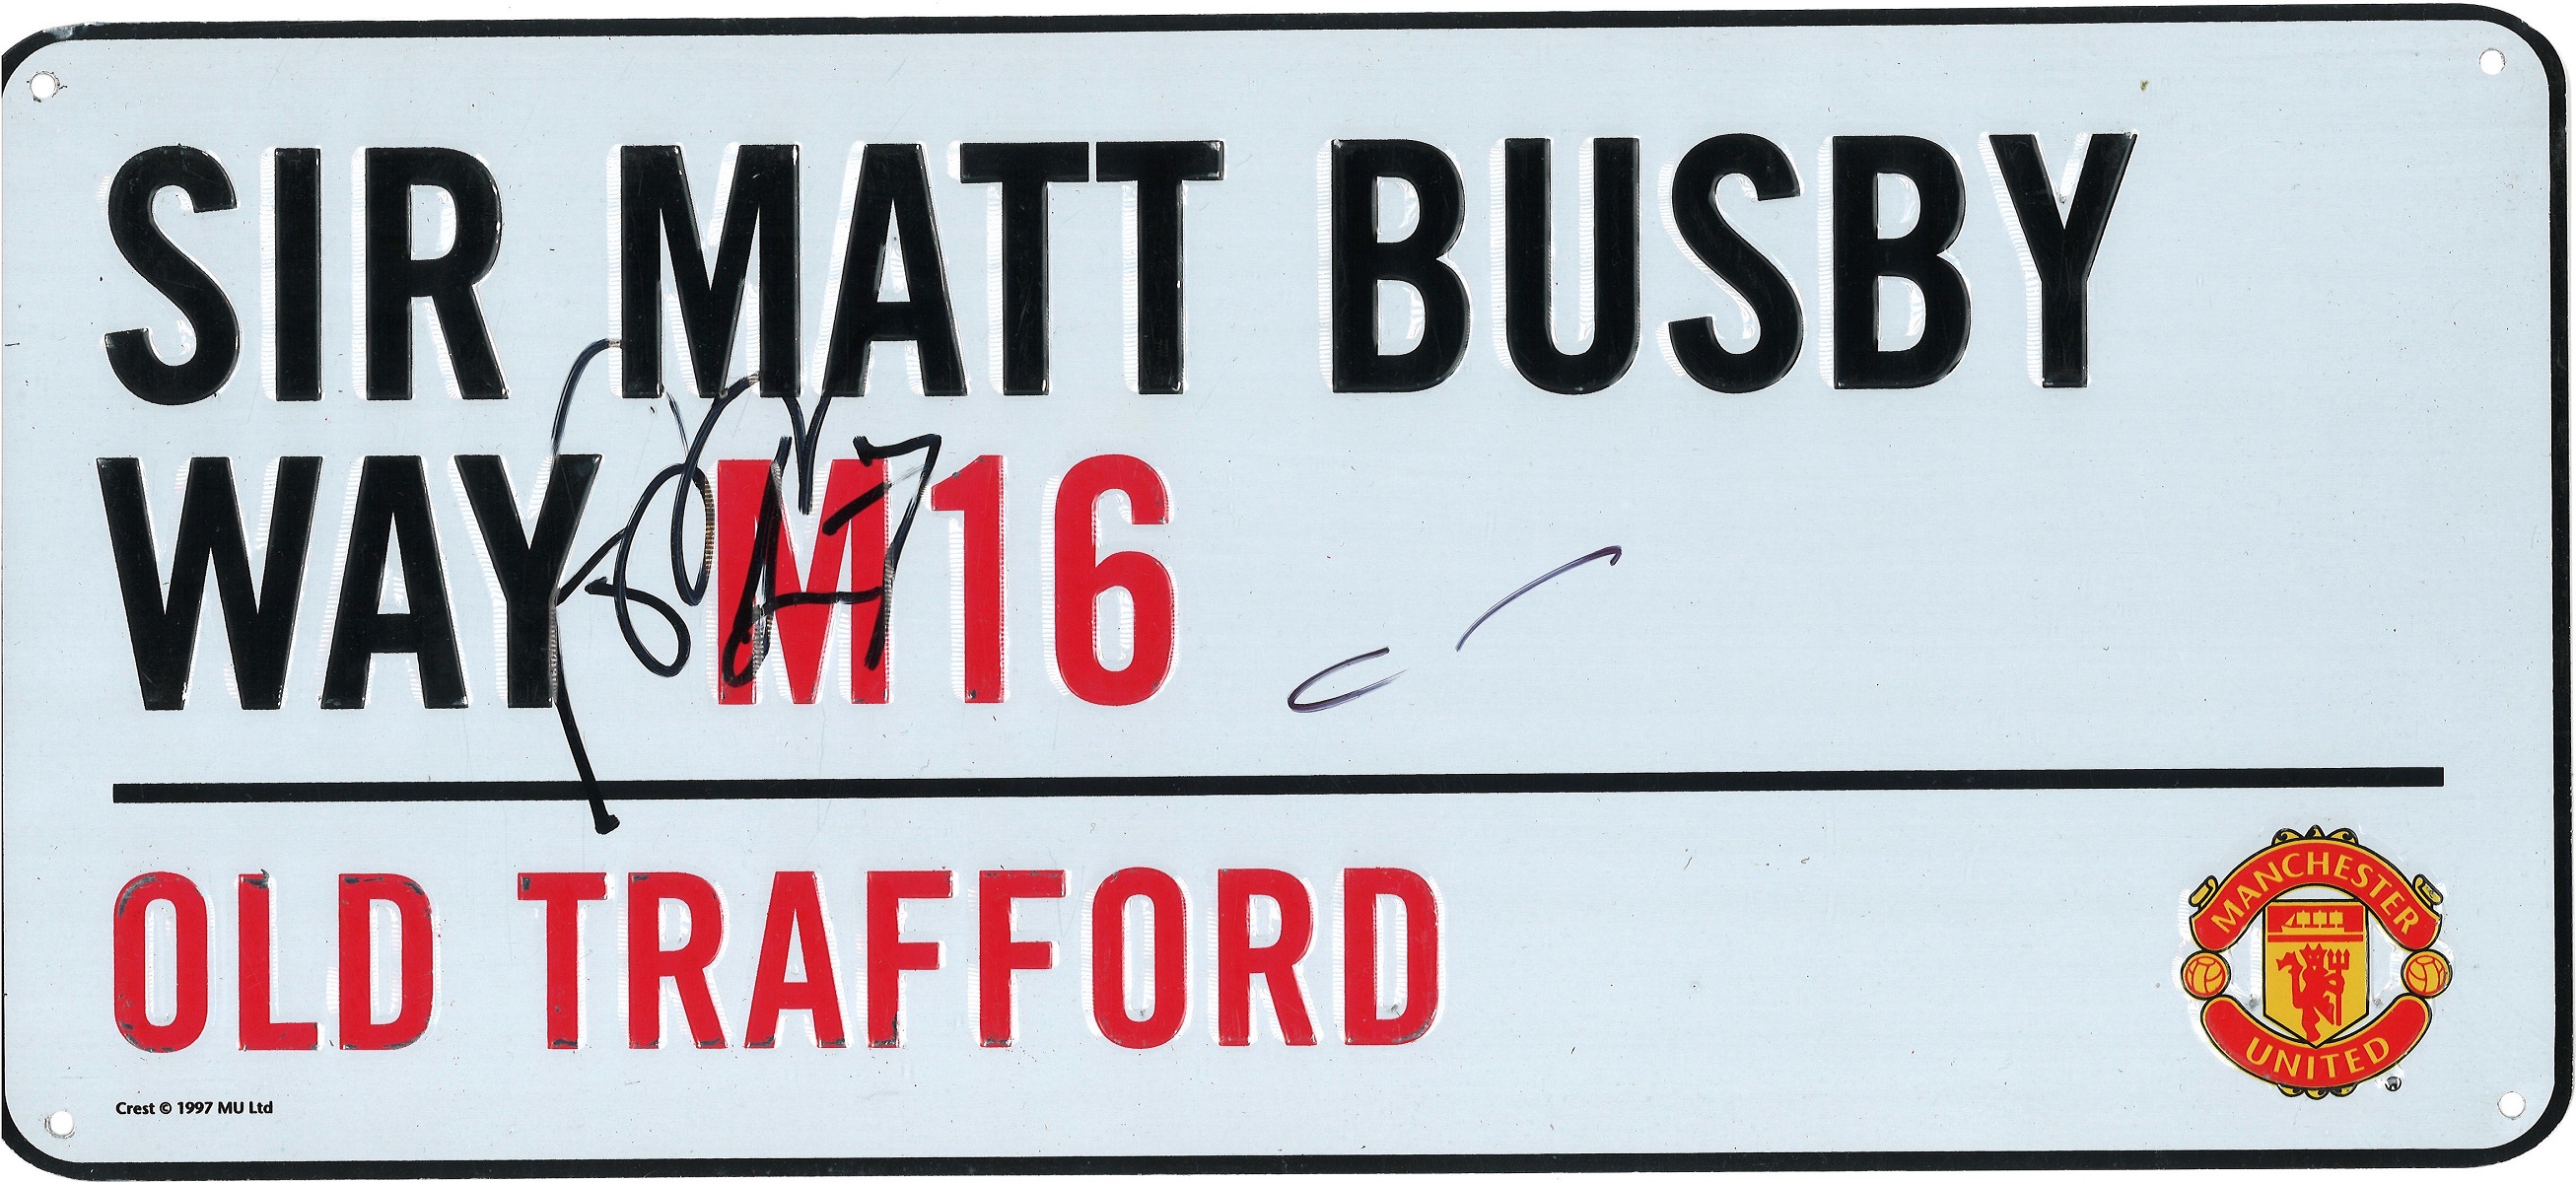 Football Marouane Fellaini signed Sir Matt Busby Way M16 Old Trafford commemorative metal road sign.